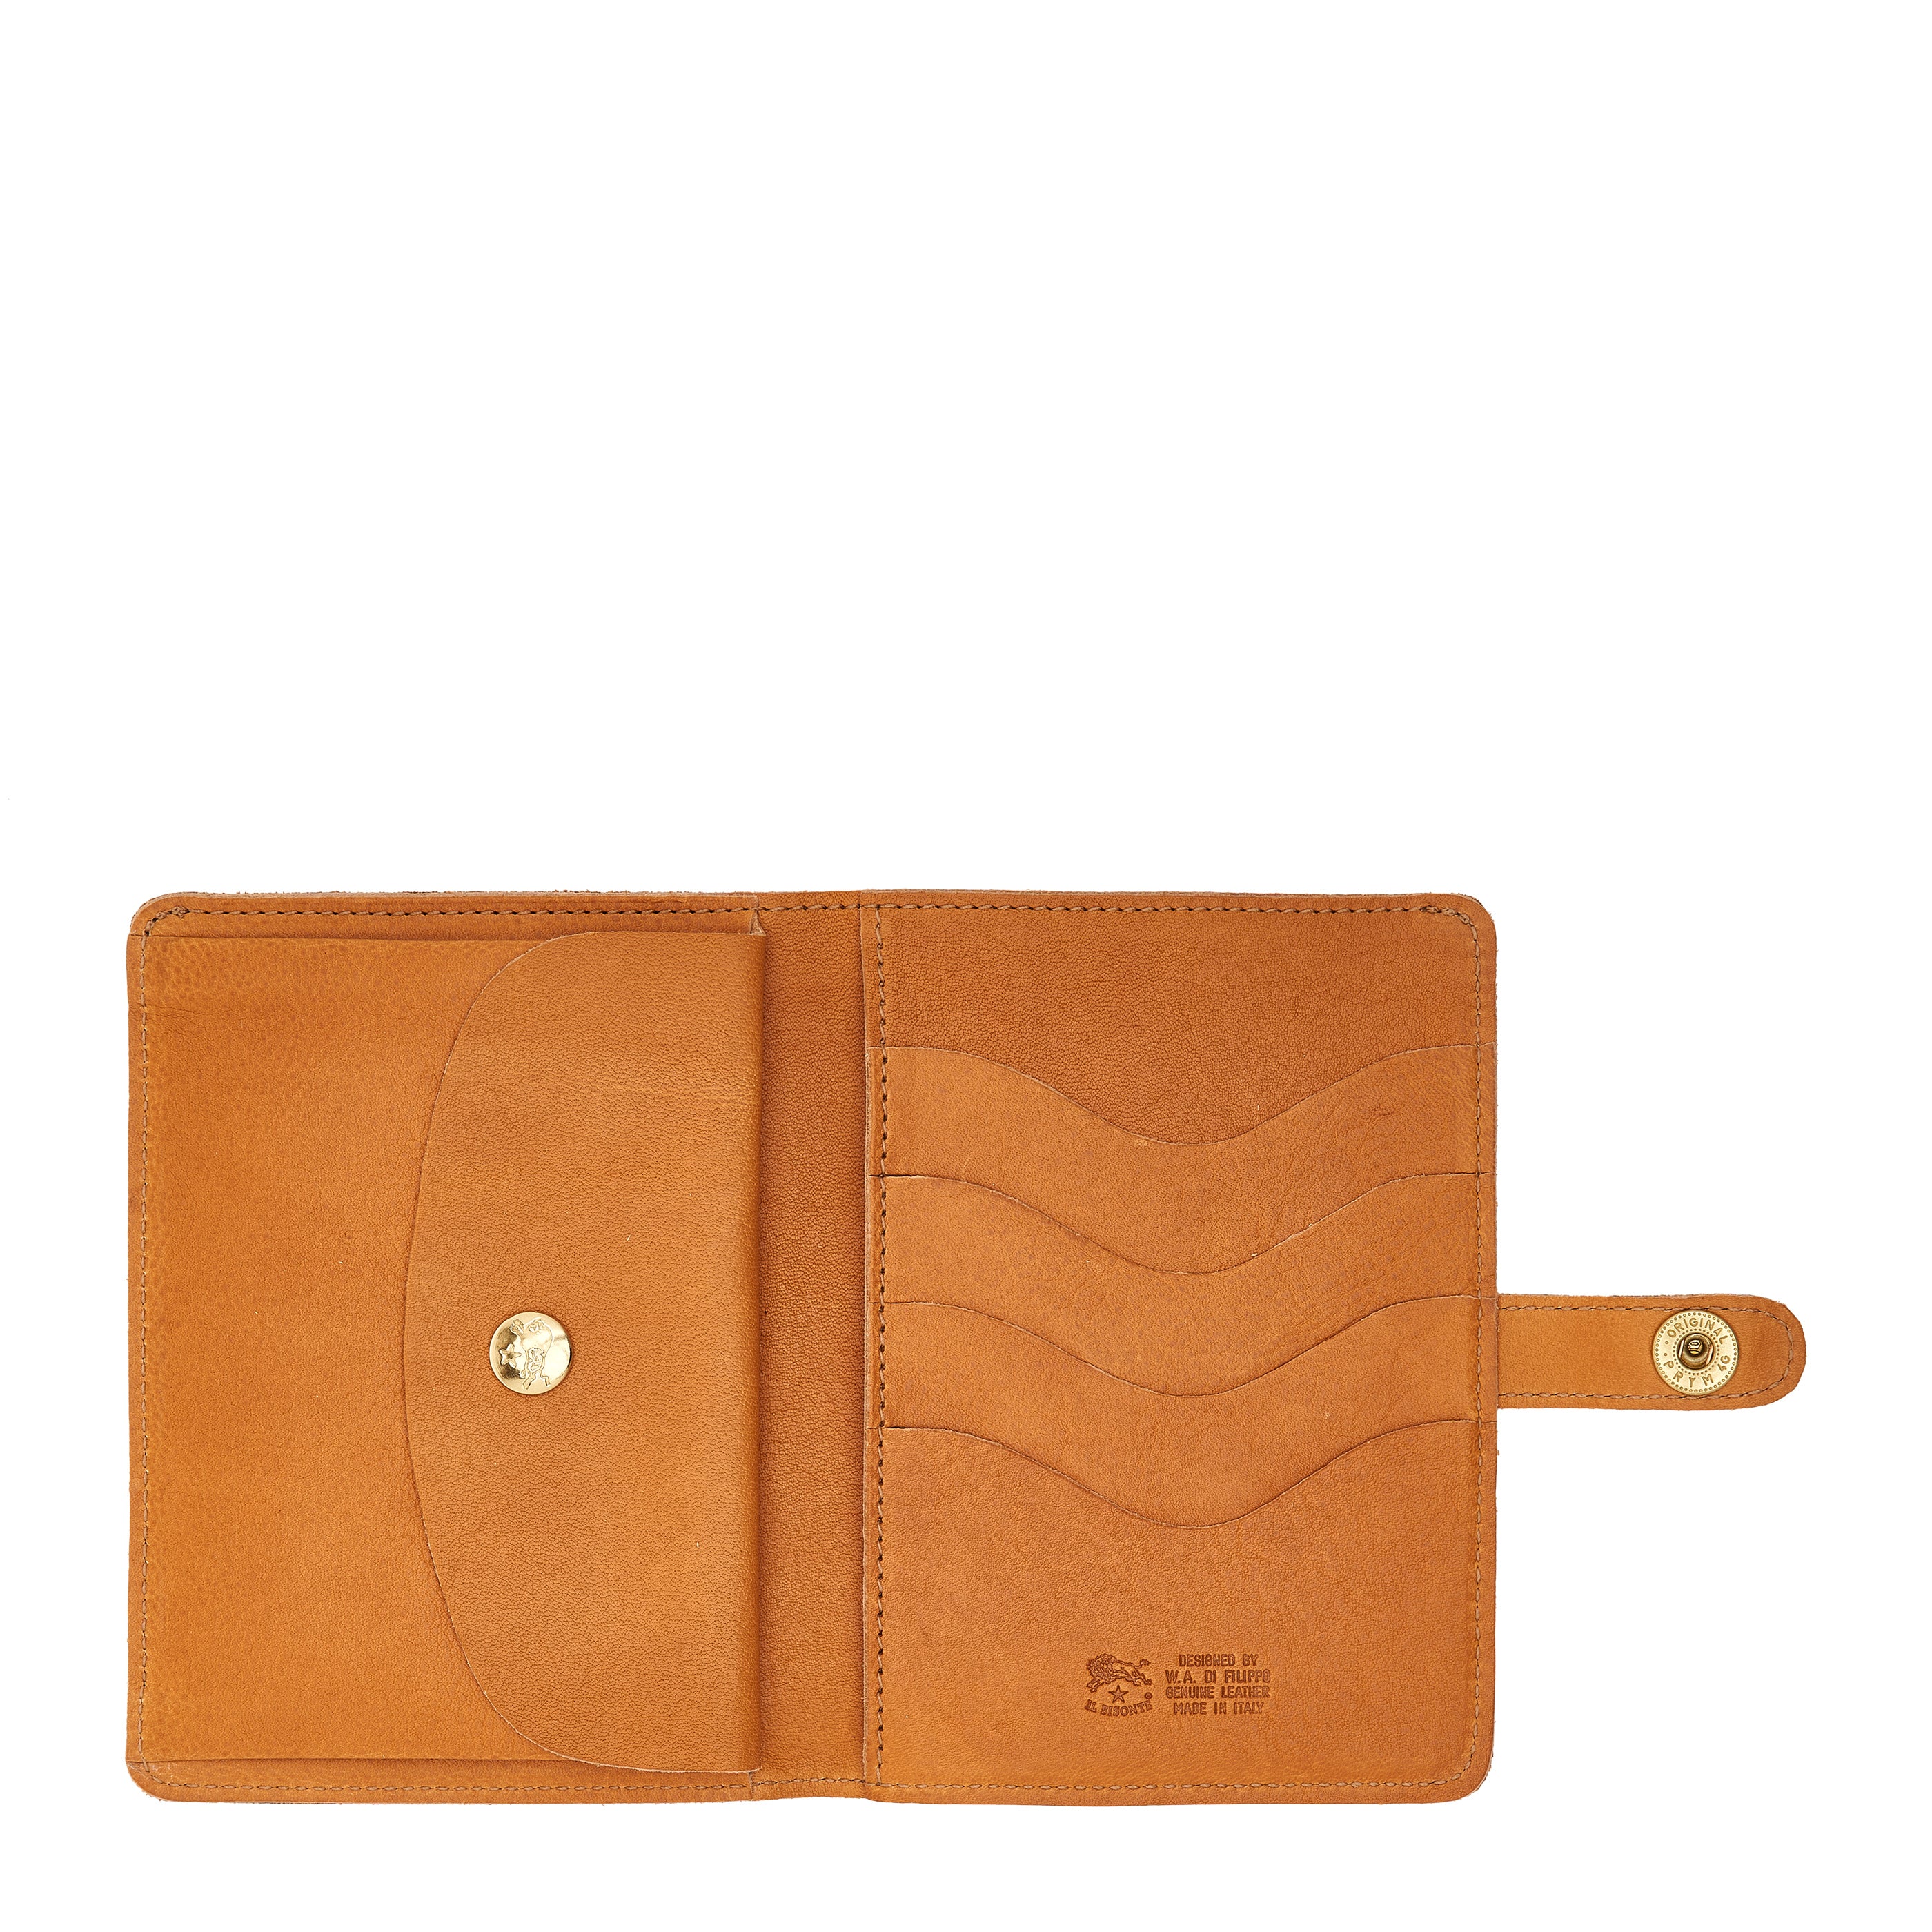 Women's wallet in vintage leather color natural